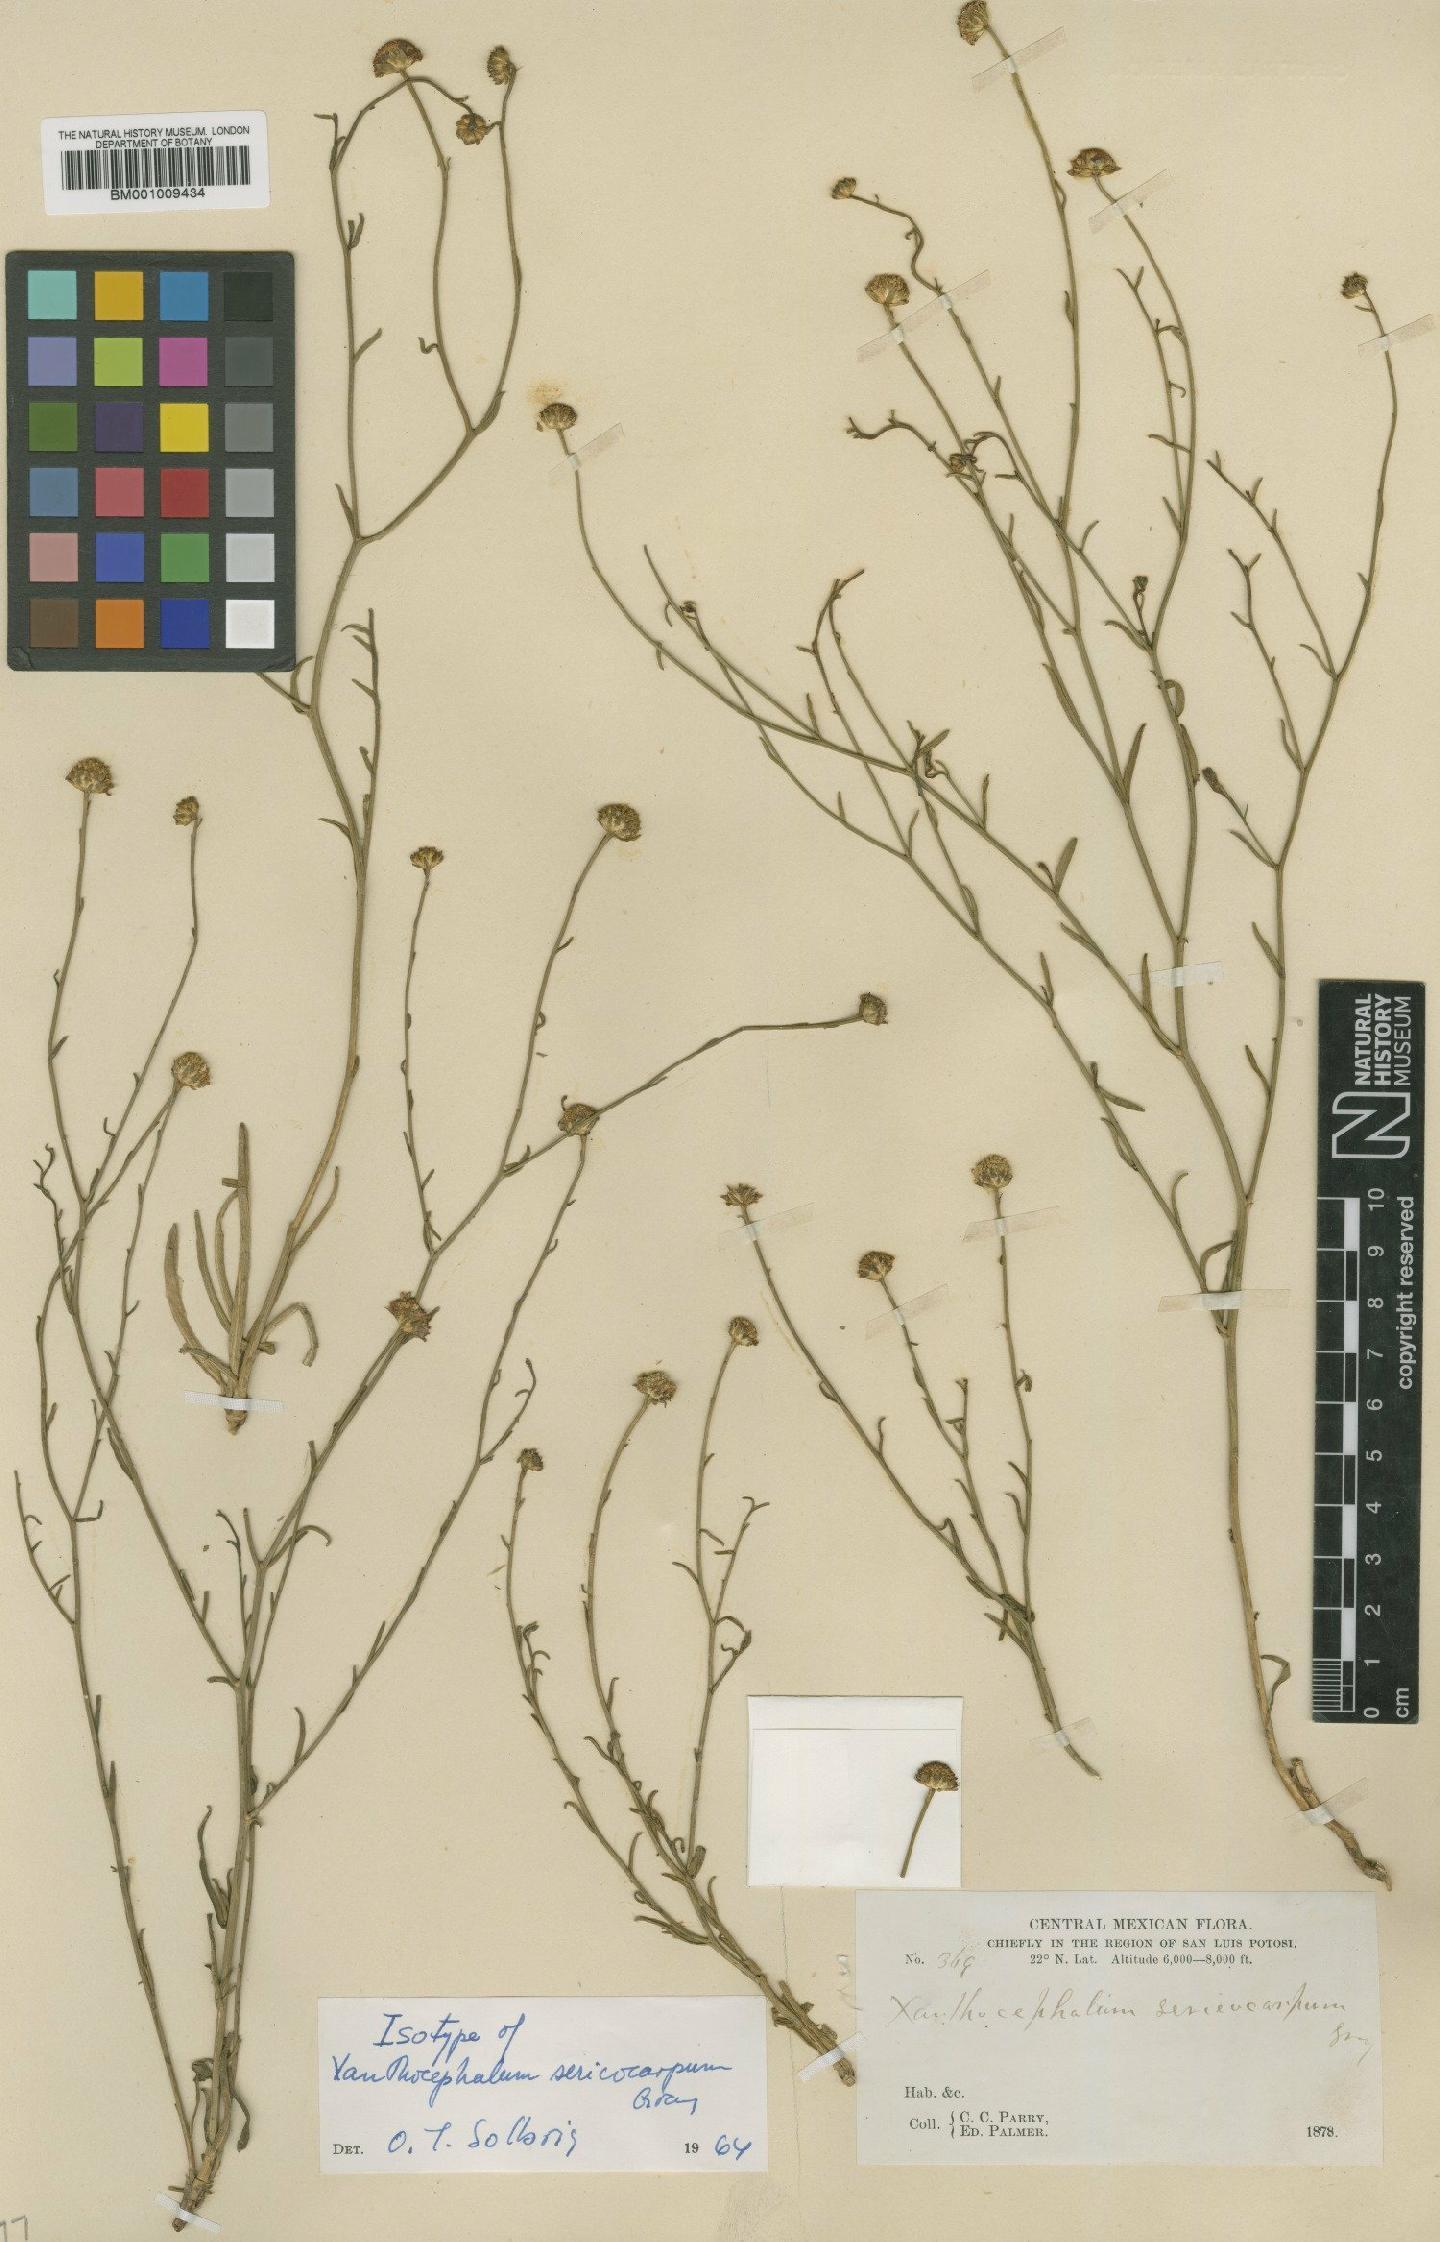 To NHMUK collection (Gutierrezia sericocarpa (A.Gray) M.A.Lane; Isotype; NHMUK:ecatalogue:610038)